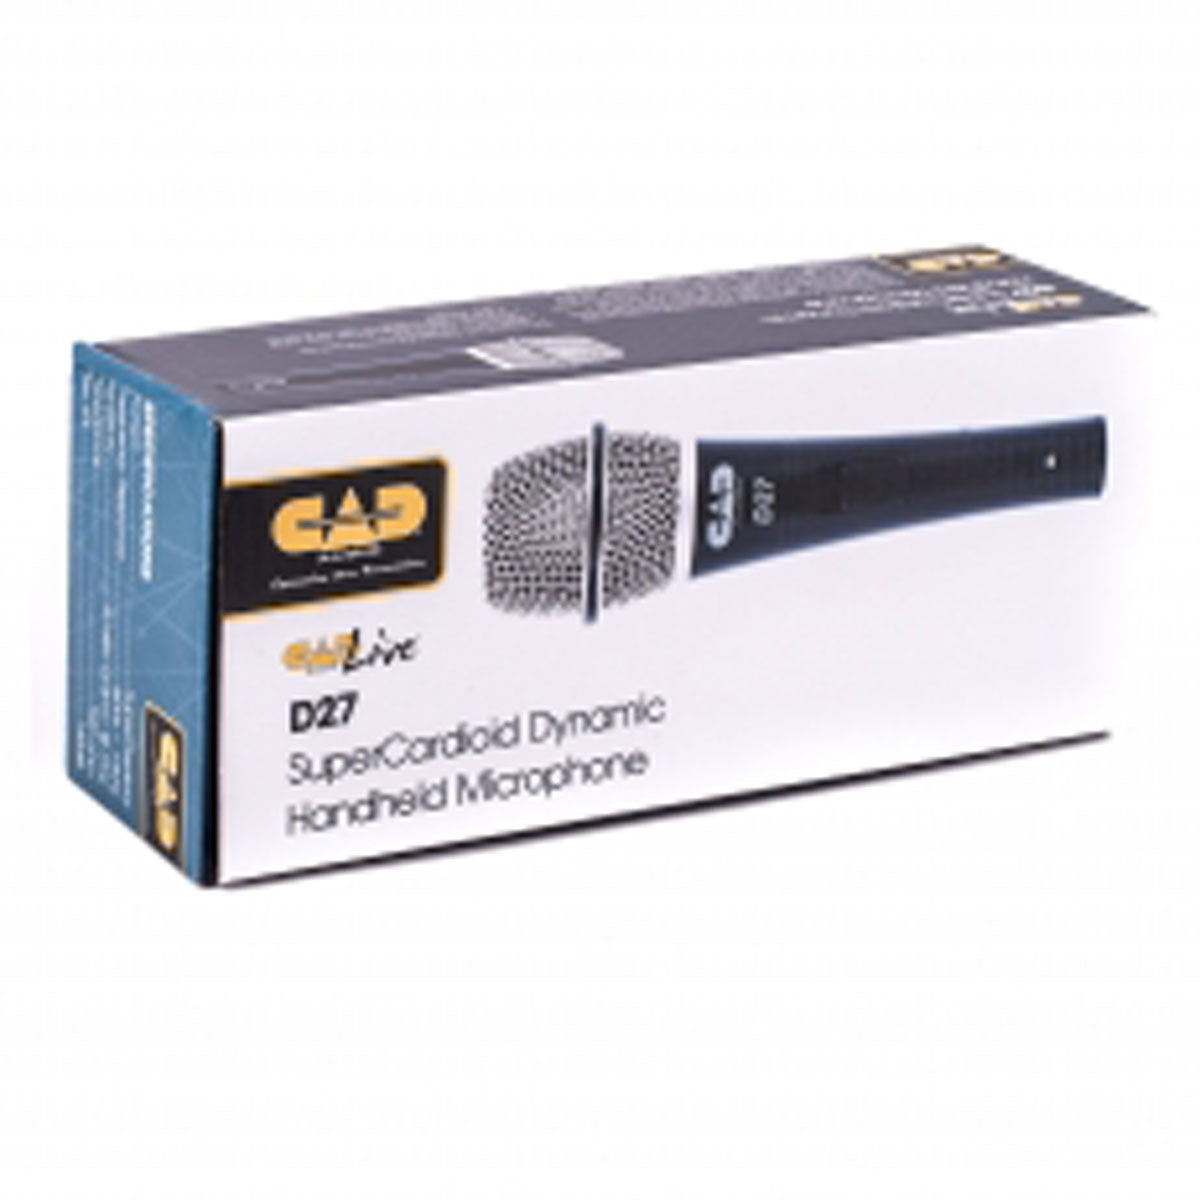 CAD Audio D27 Supercardioid Dynamic Microphone